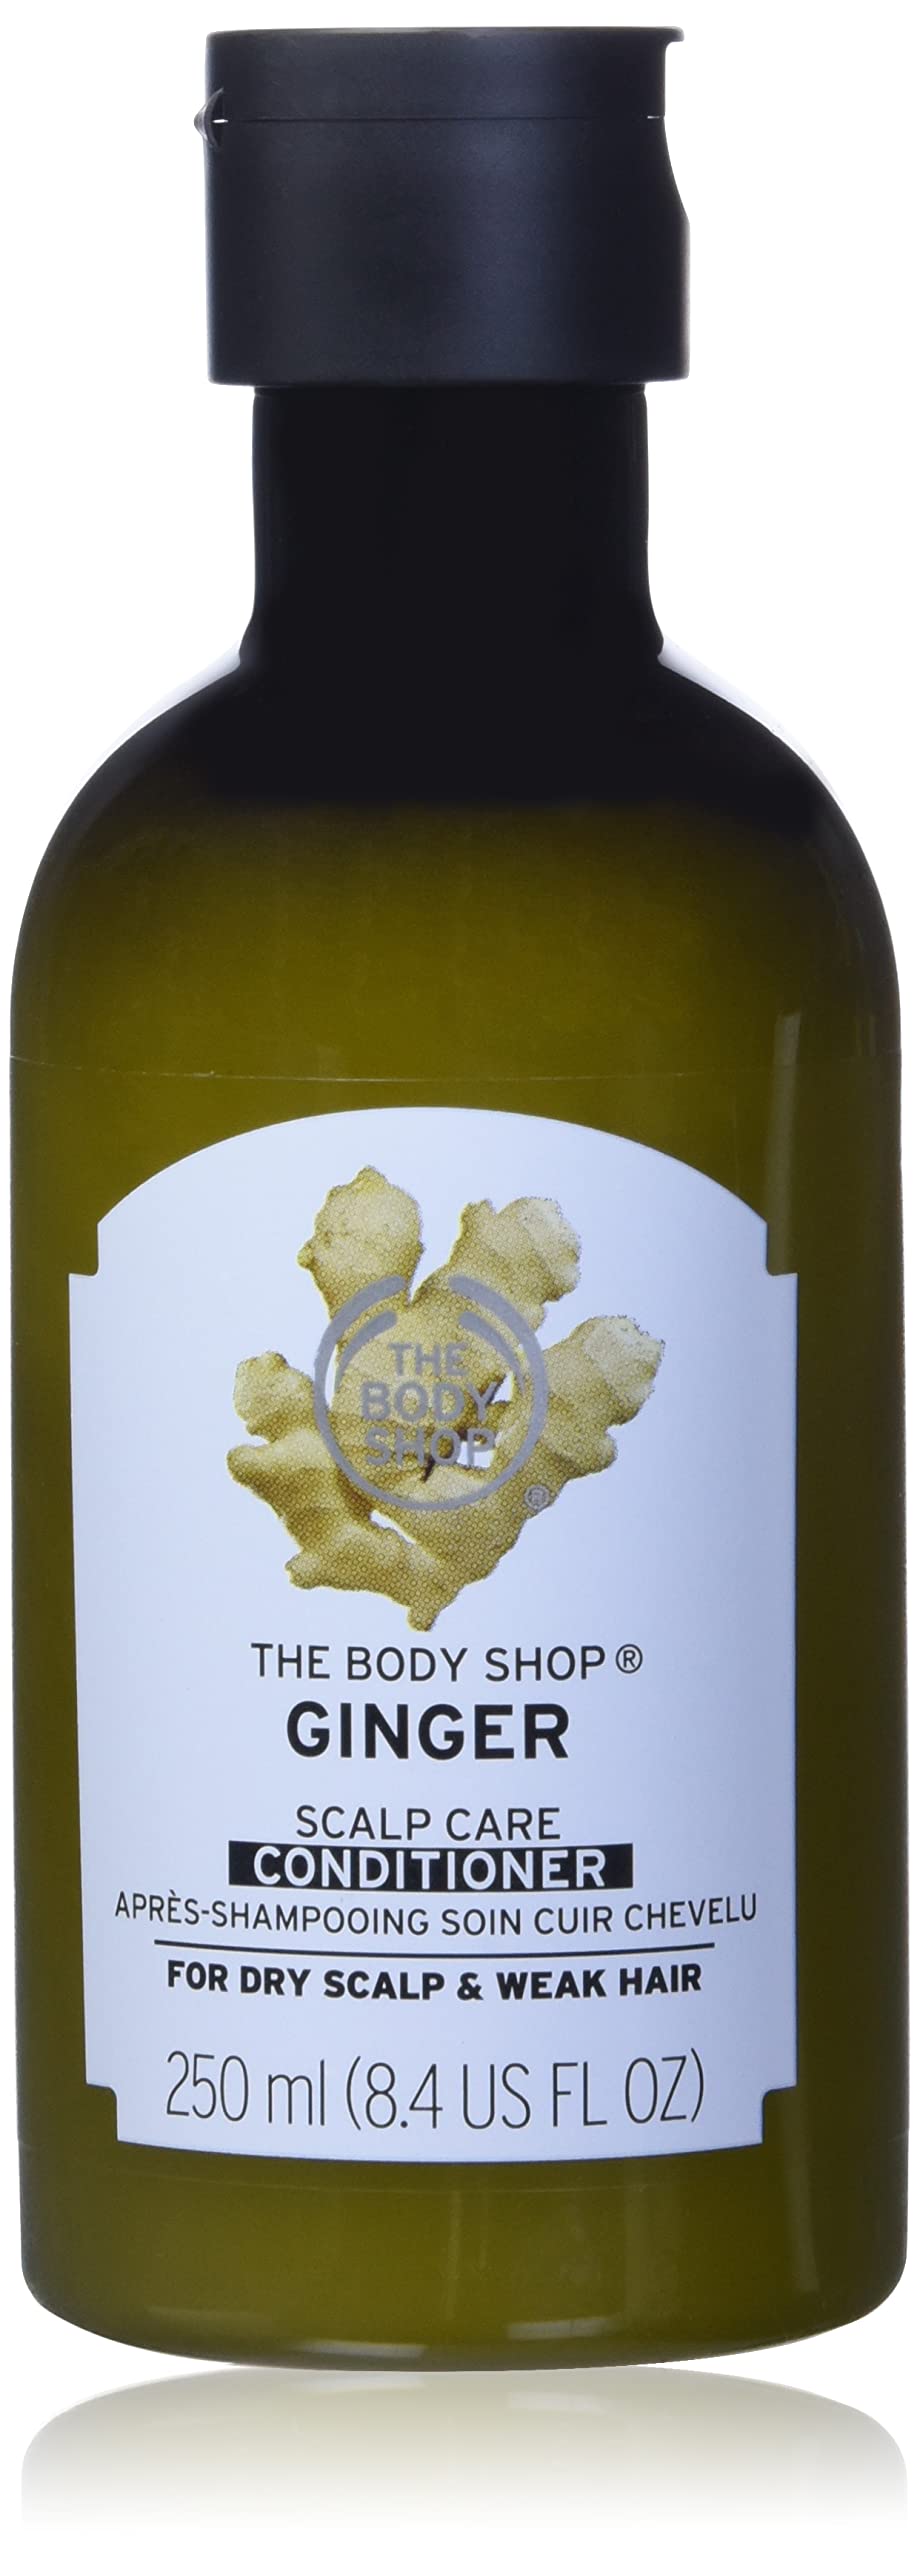 The Body Shop 250ml Cond Anti Dandruff, Ginger